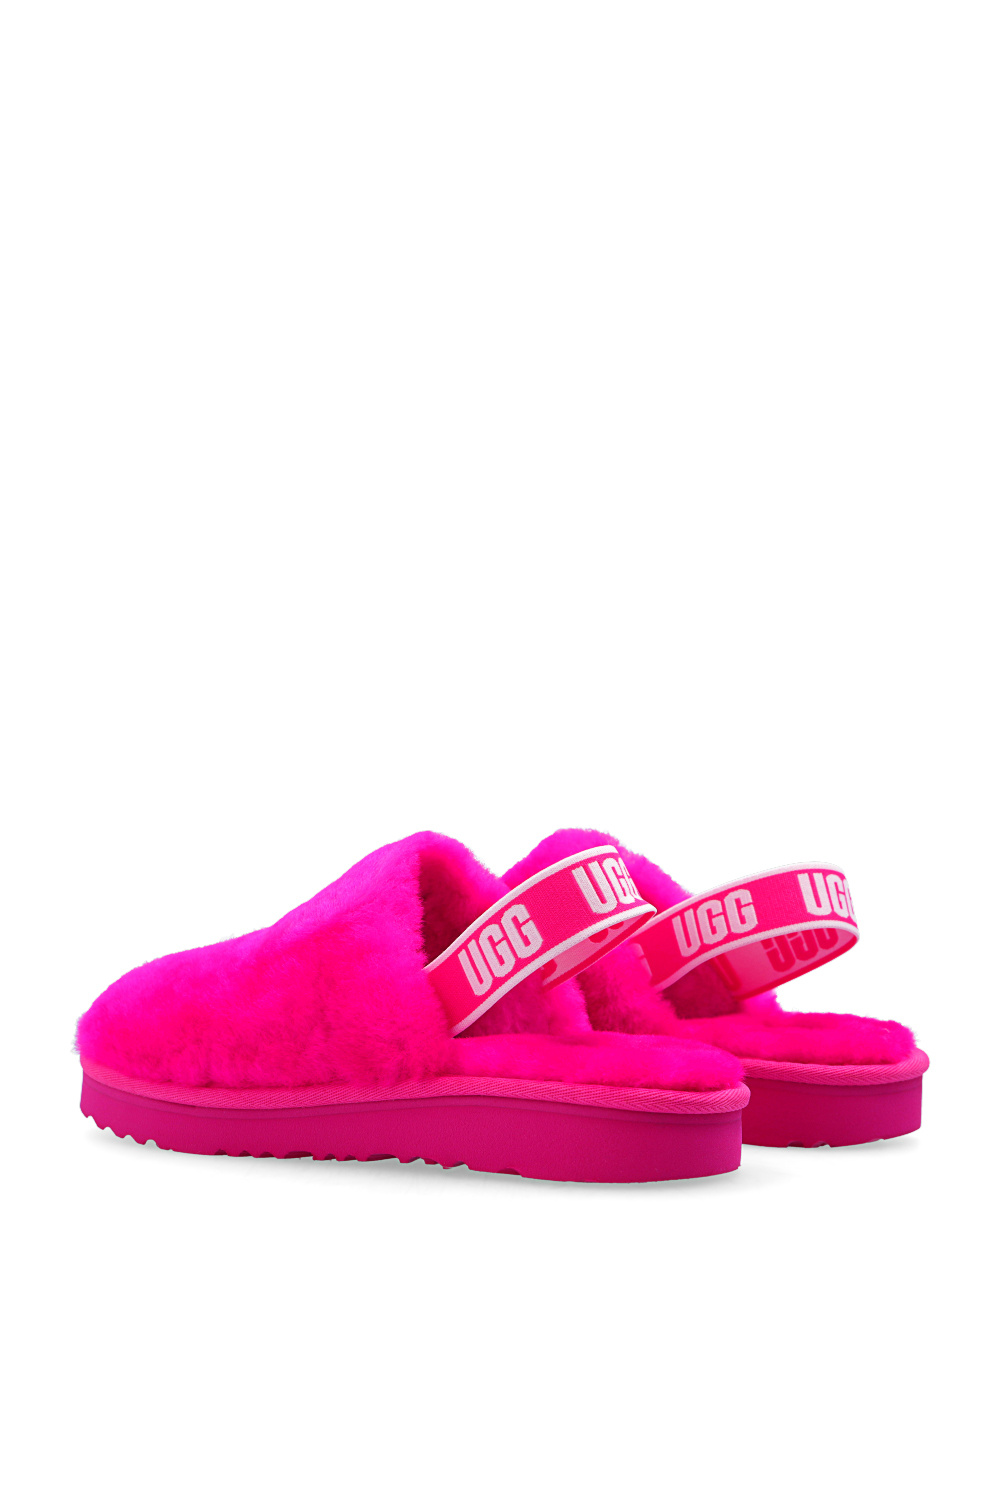 UGG Kids ‘Fluff Yeah Clog’ new shoes